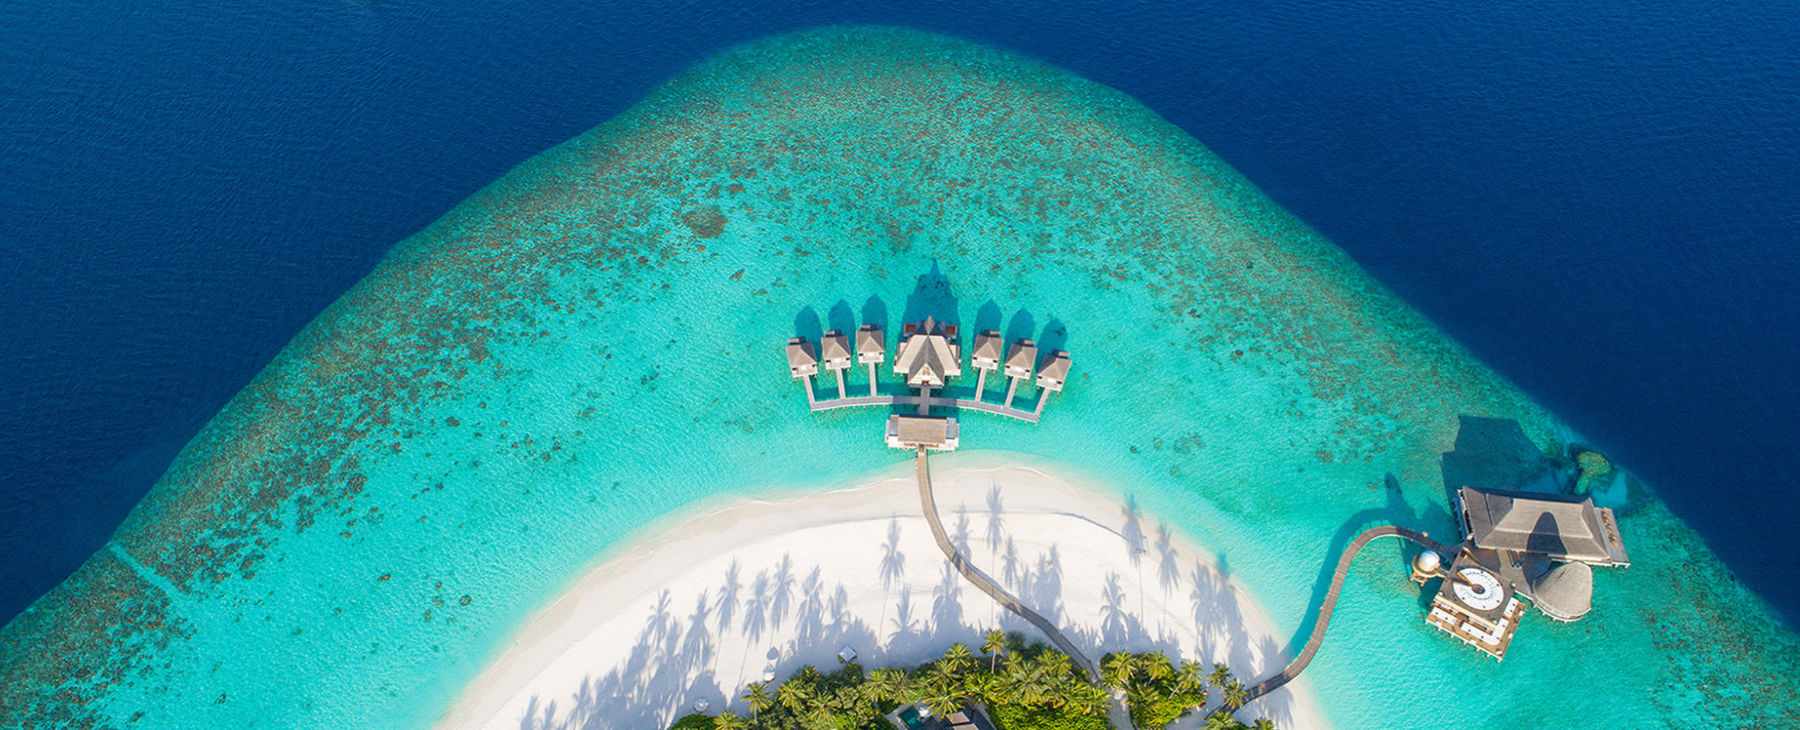 Luxusurlaub Hotel Malediven Anantara Kihavah Slider